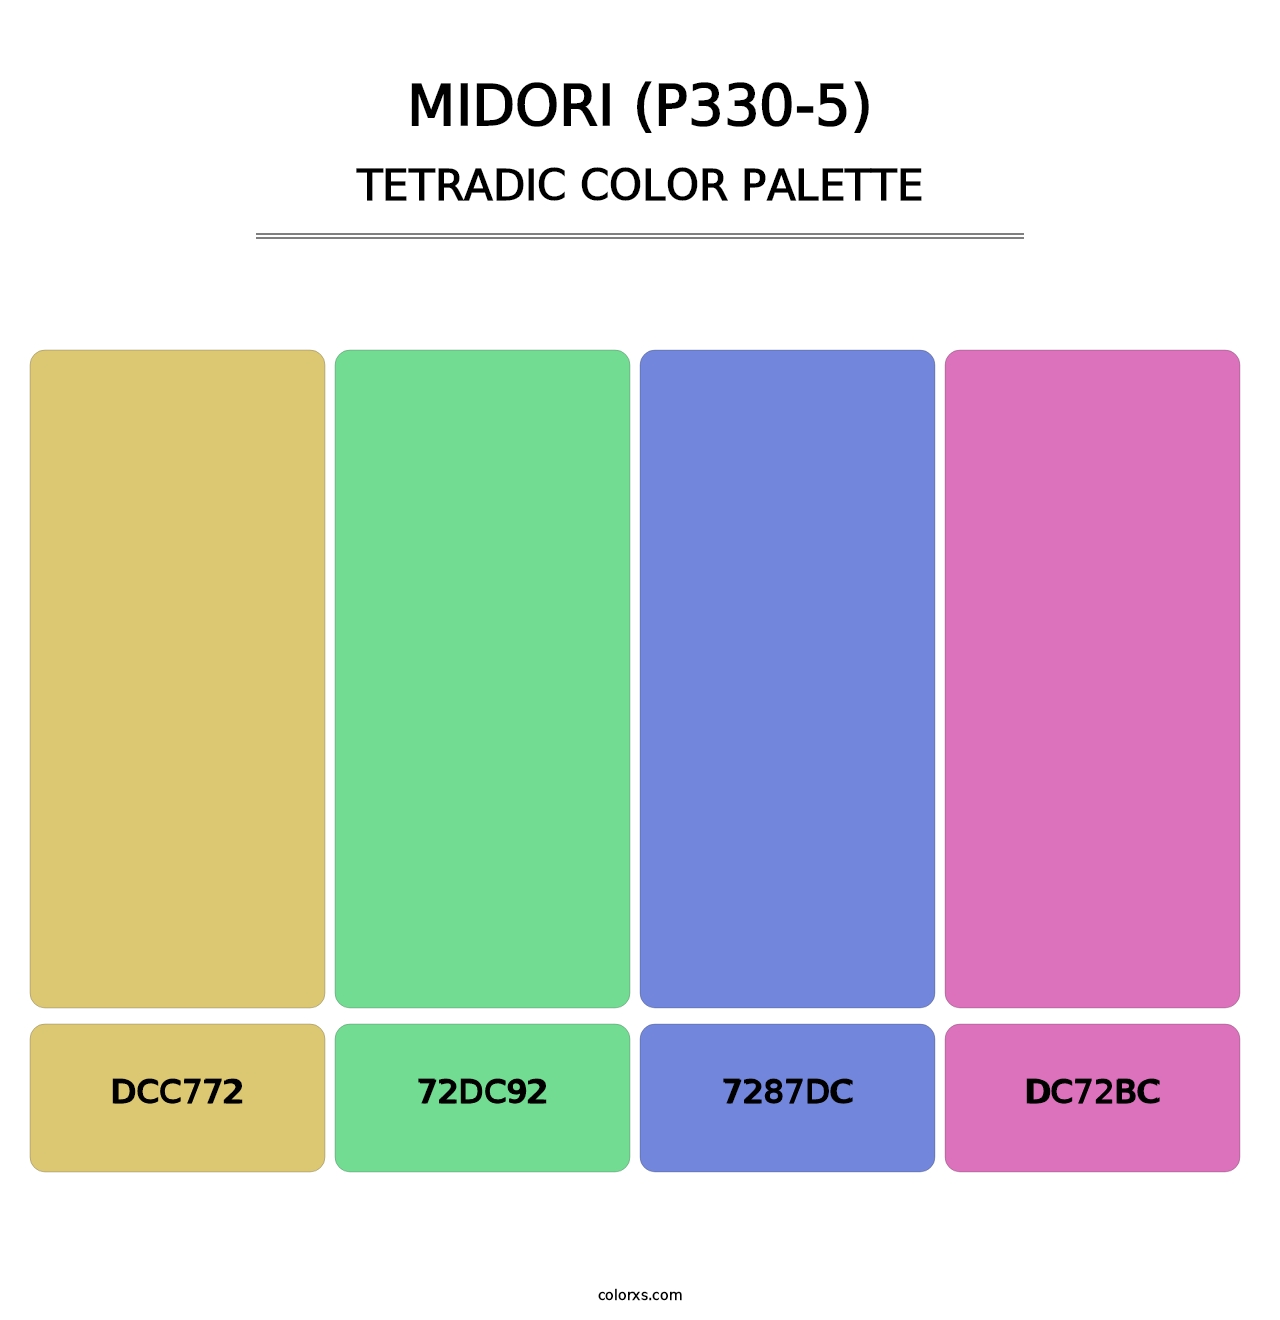 Midori (P330-5) - Tetradic Color Palette